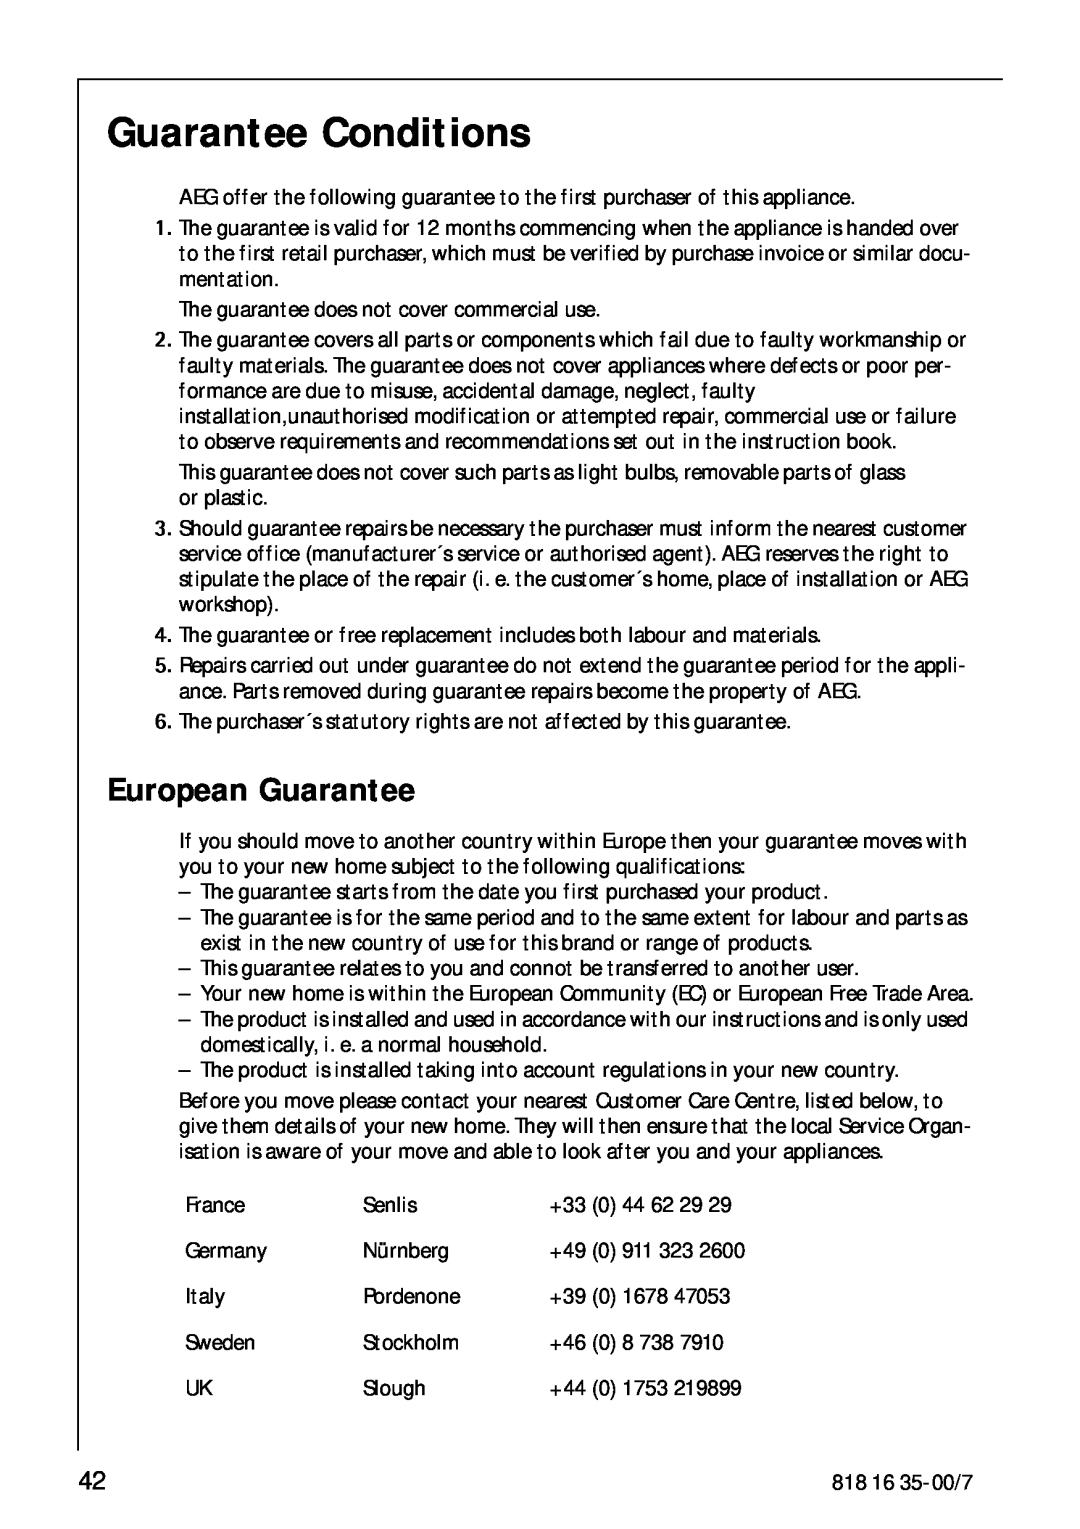 Electrolux KO_SANTO 4085 operating instructions Guarantee Conditions, European Guarantee 